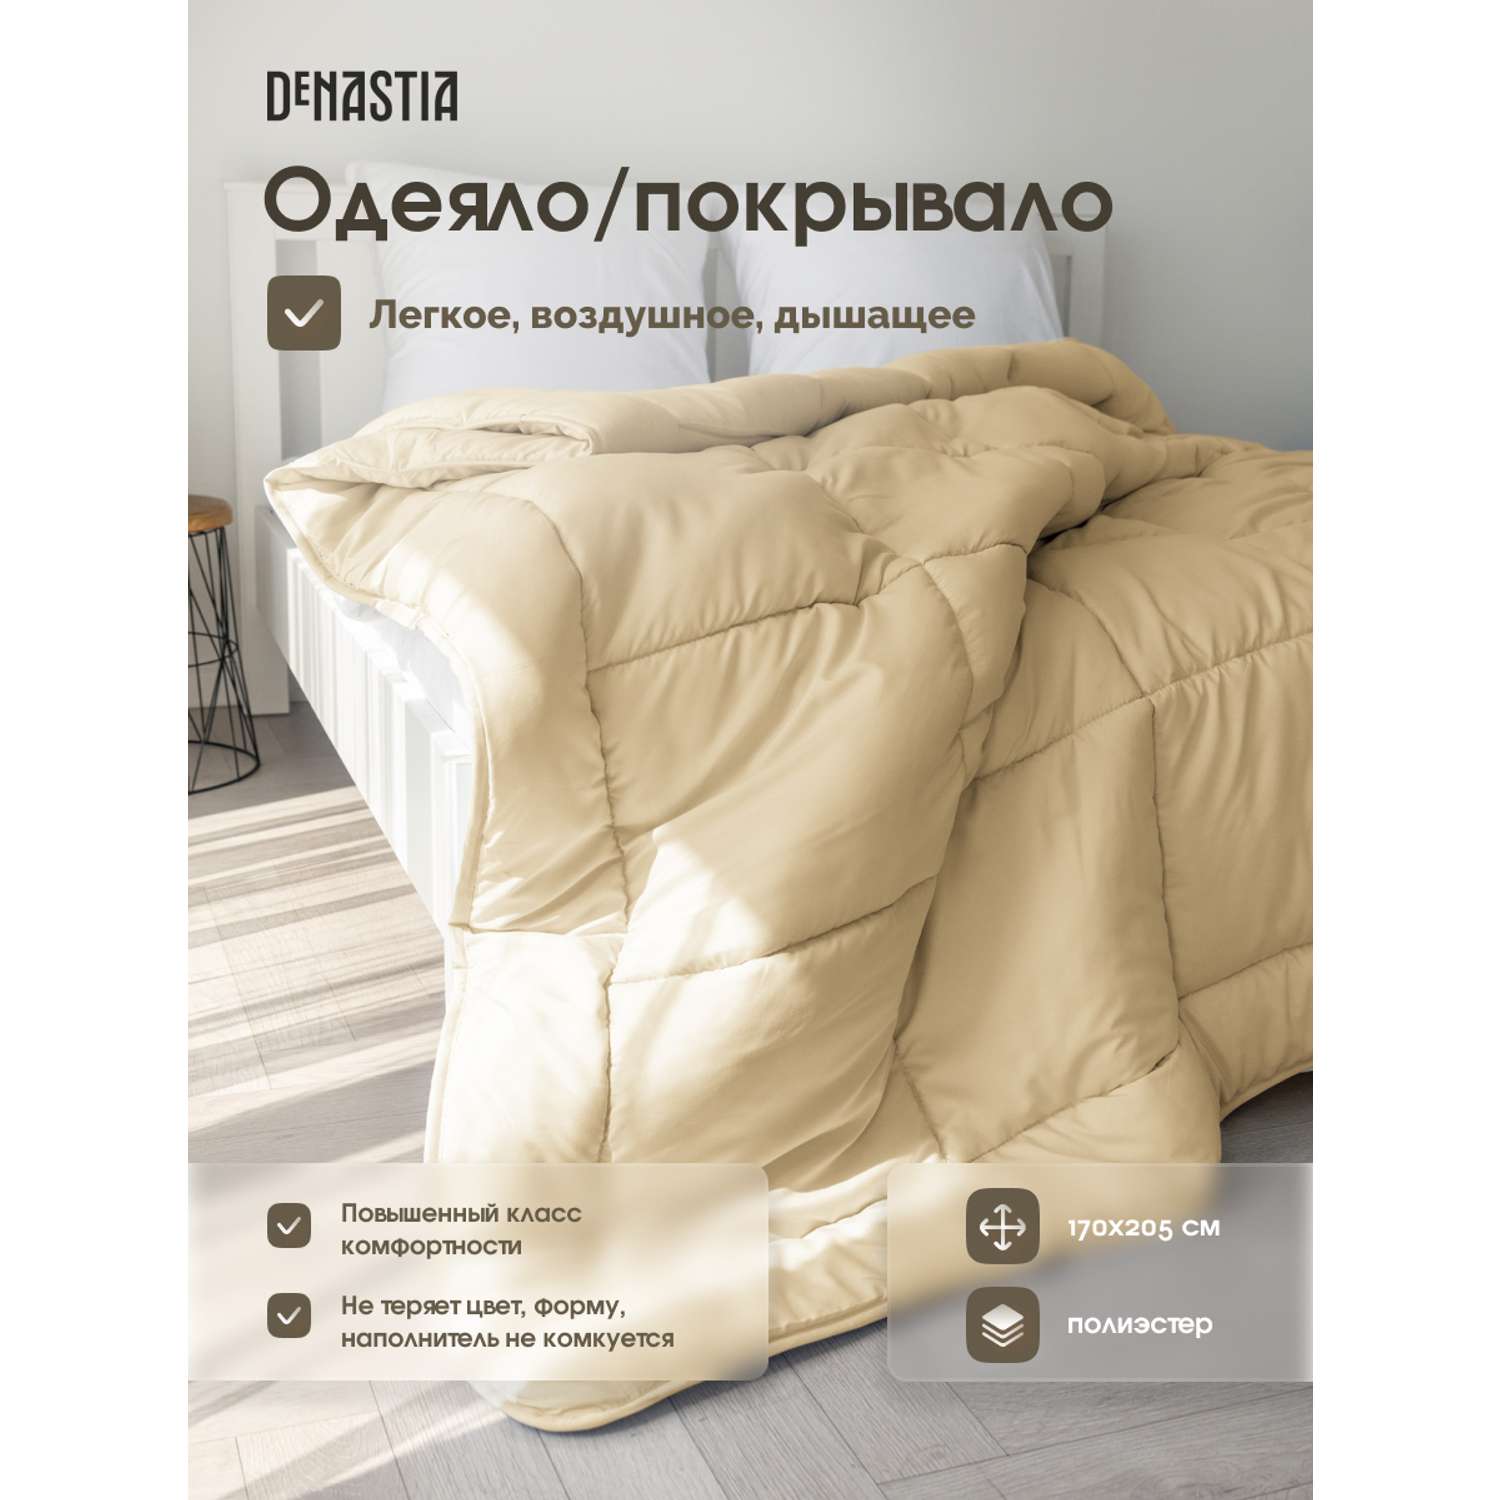 Одеяло/покрывало DeNASTIA 170x205 см желтый R020015 - фото 2